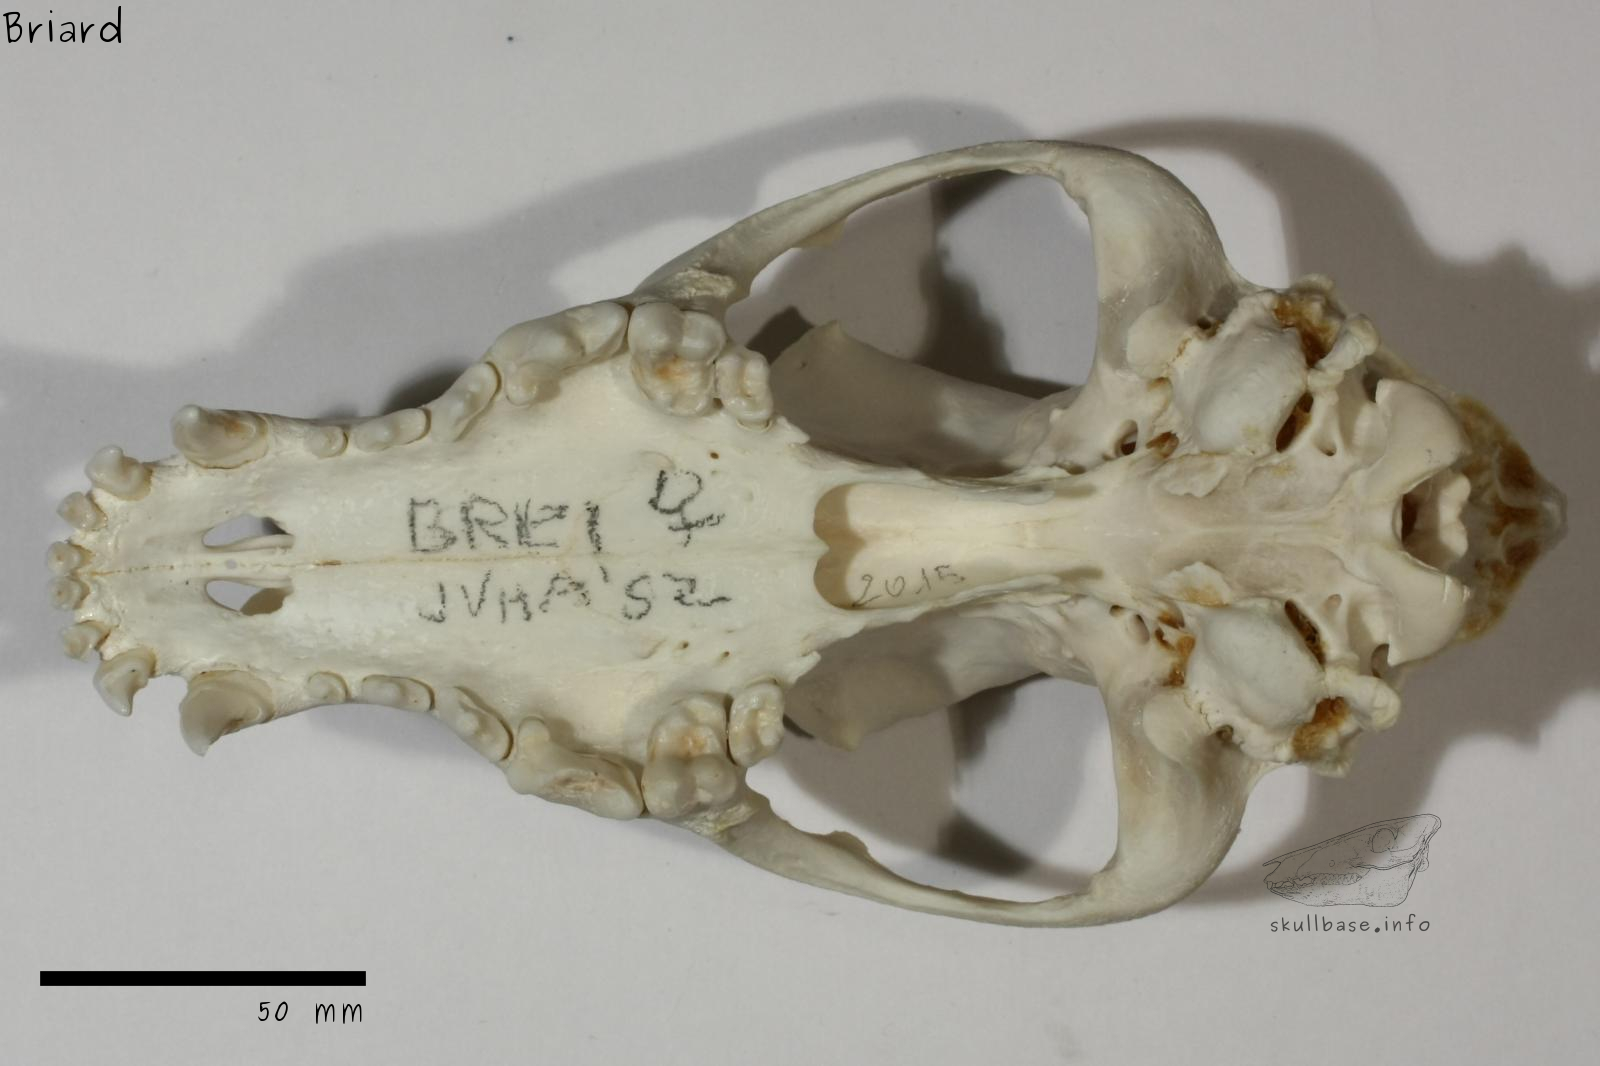 Briard (Canis lupus familiaris) skull ventral view